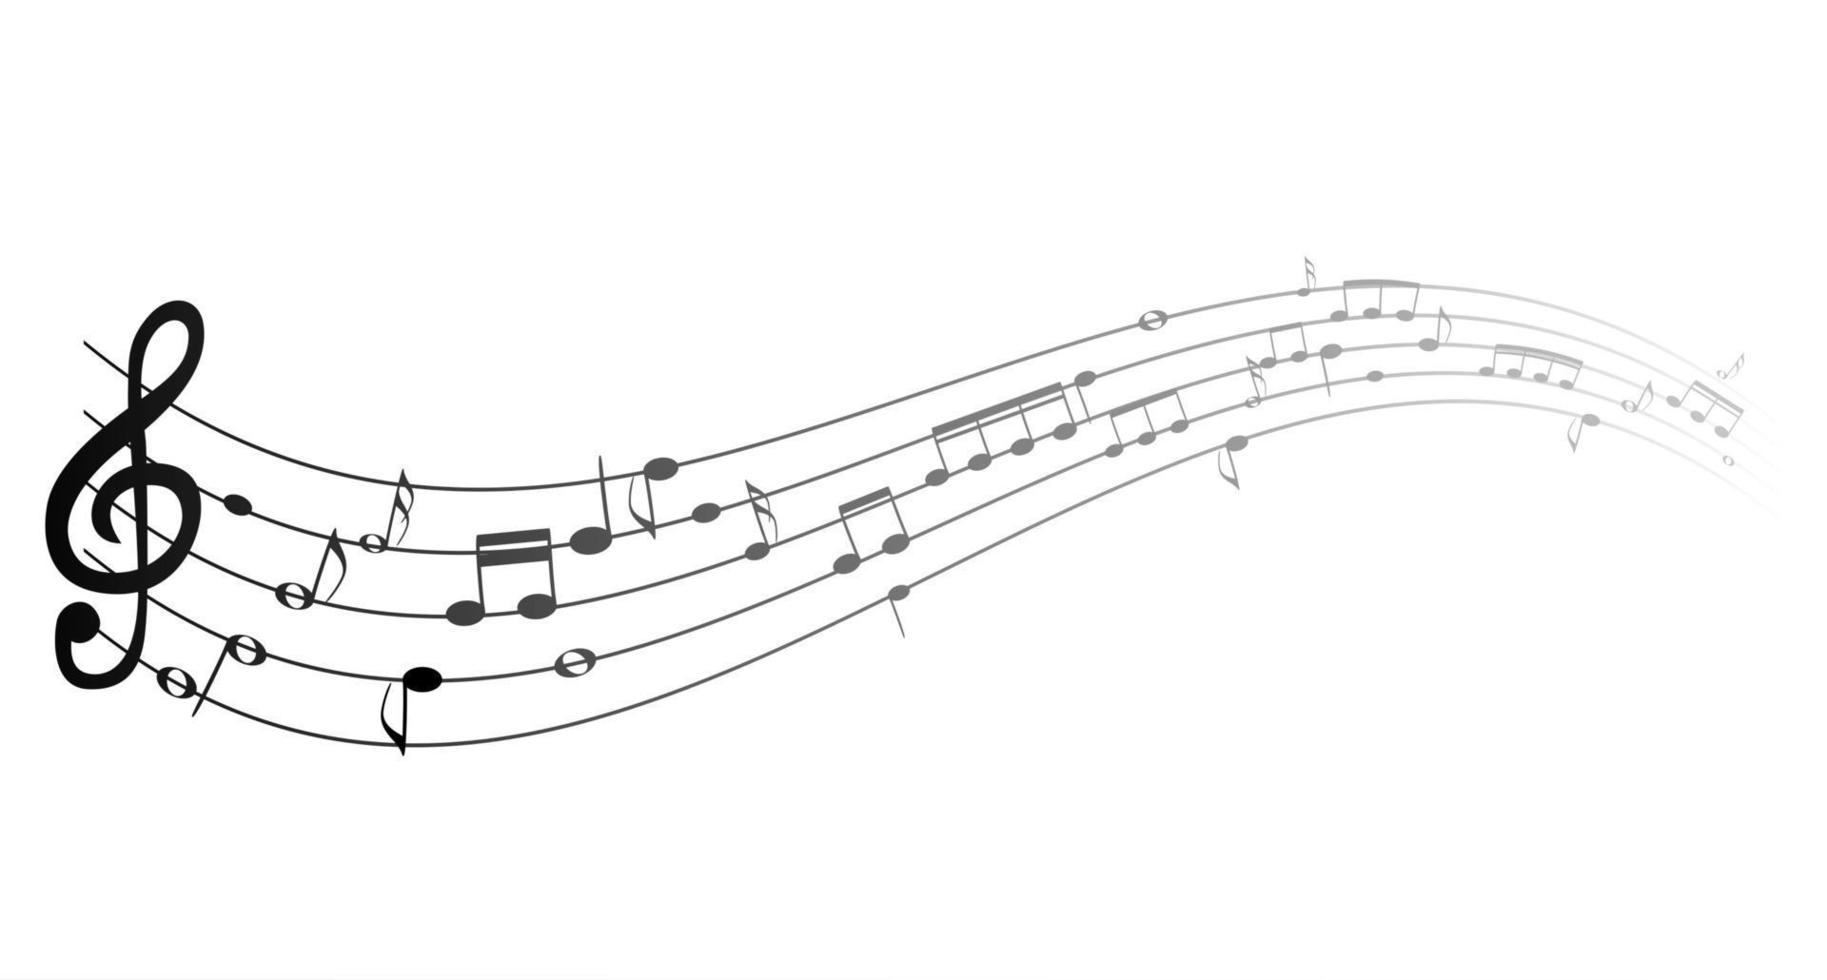 insieme di note musicali su notazione di orologio a cinque righe senza una chiave di violino caratteristica vettore